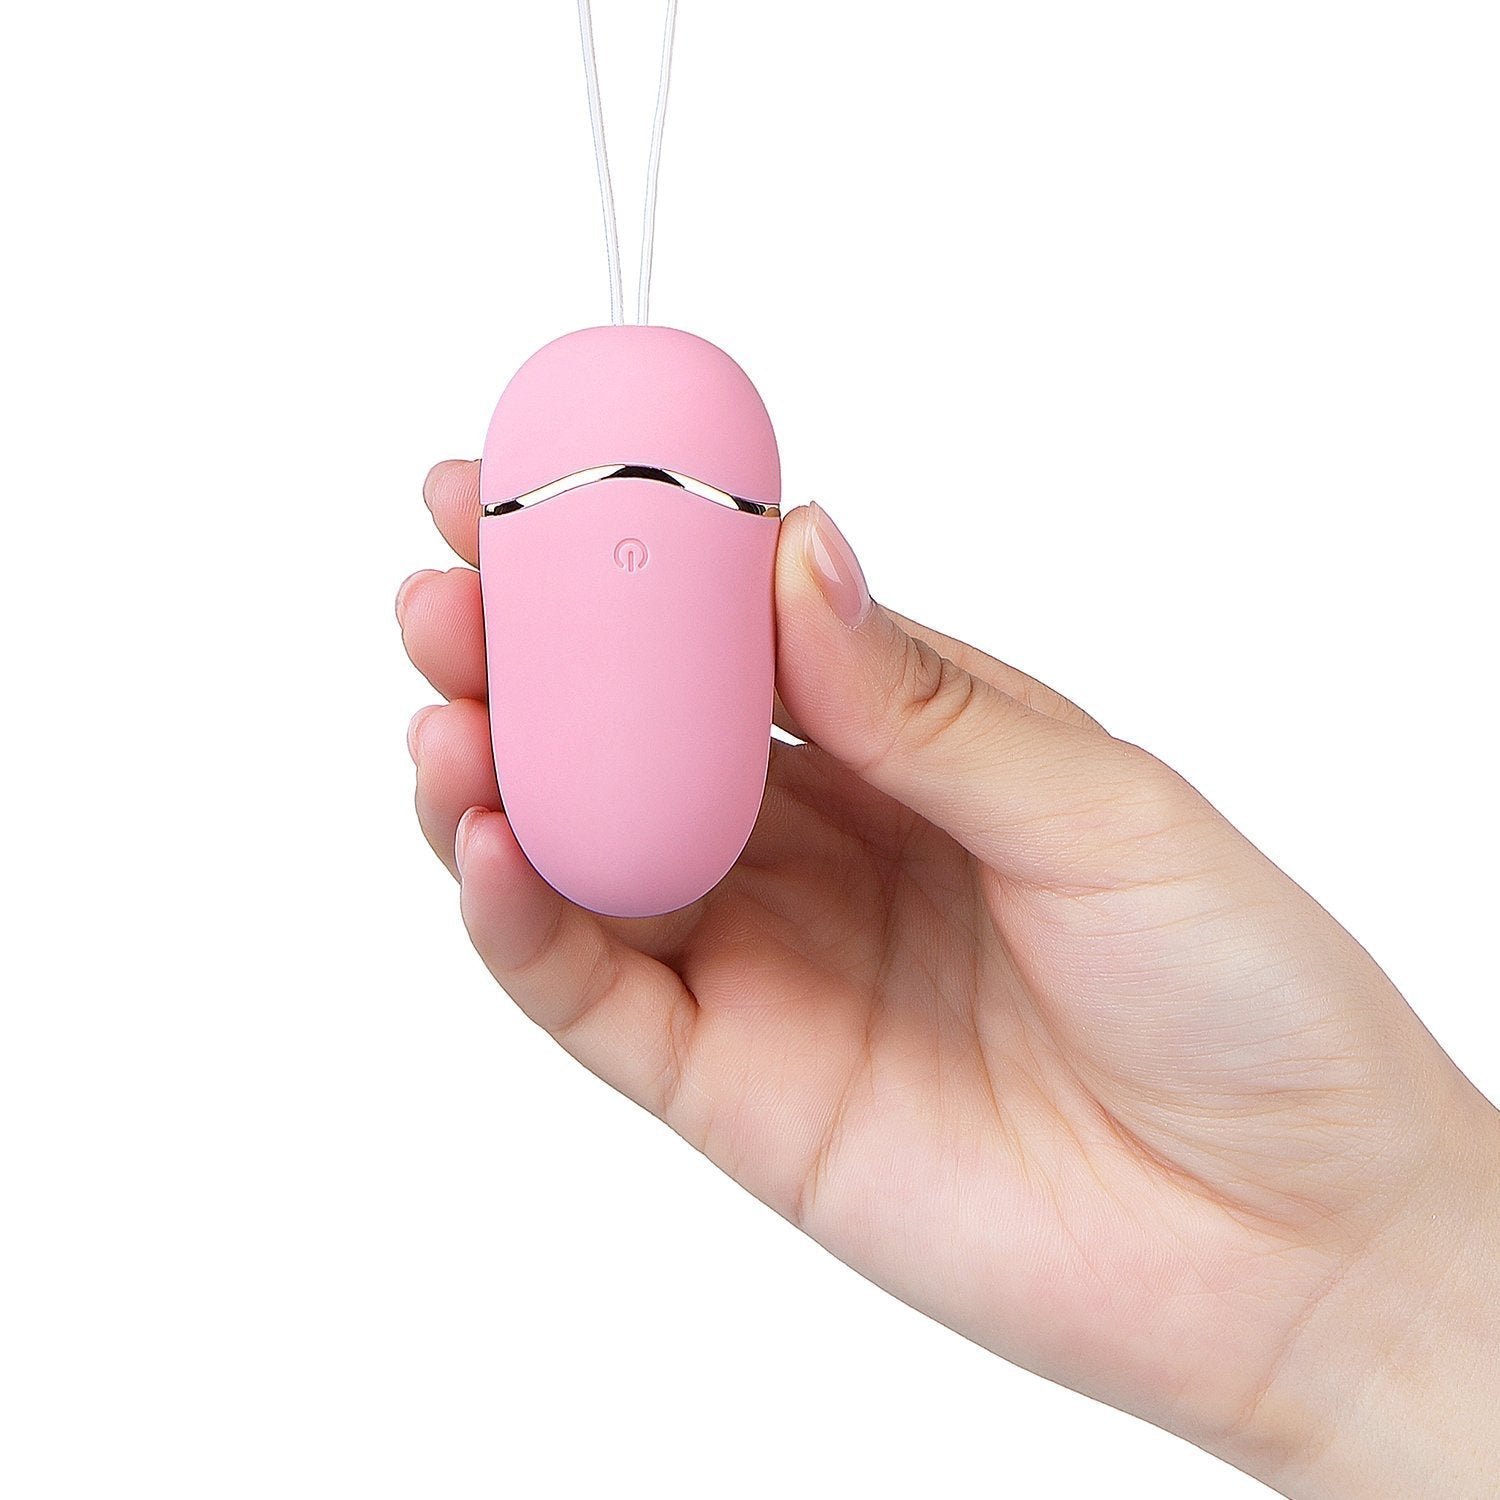 Erocome - UrsaMinor Remote Control Egg Vibrator (Pink) -  Wireless Remote Control Egg (Vibration) Rechargeable  Durio.sg